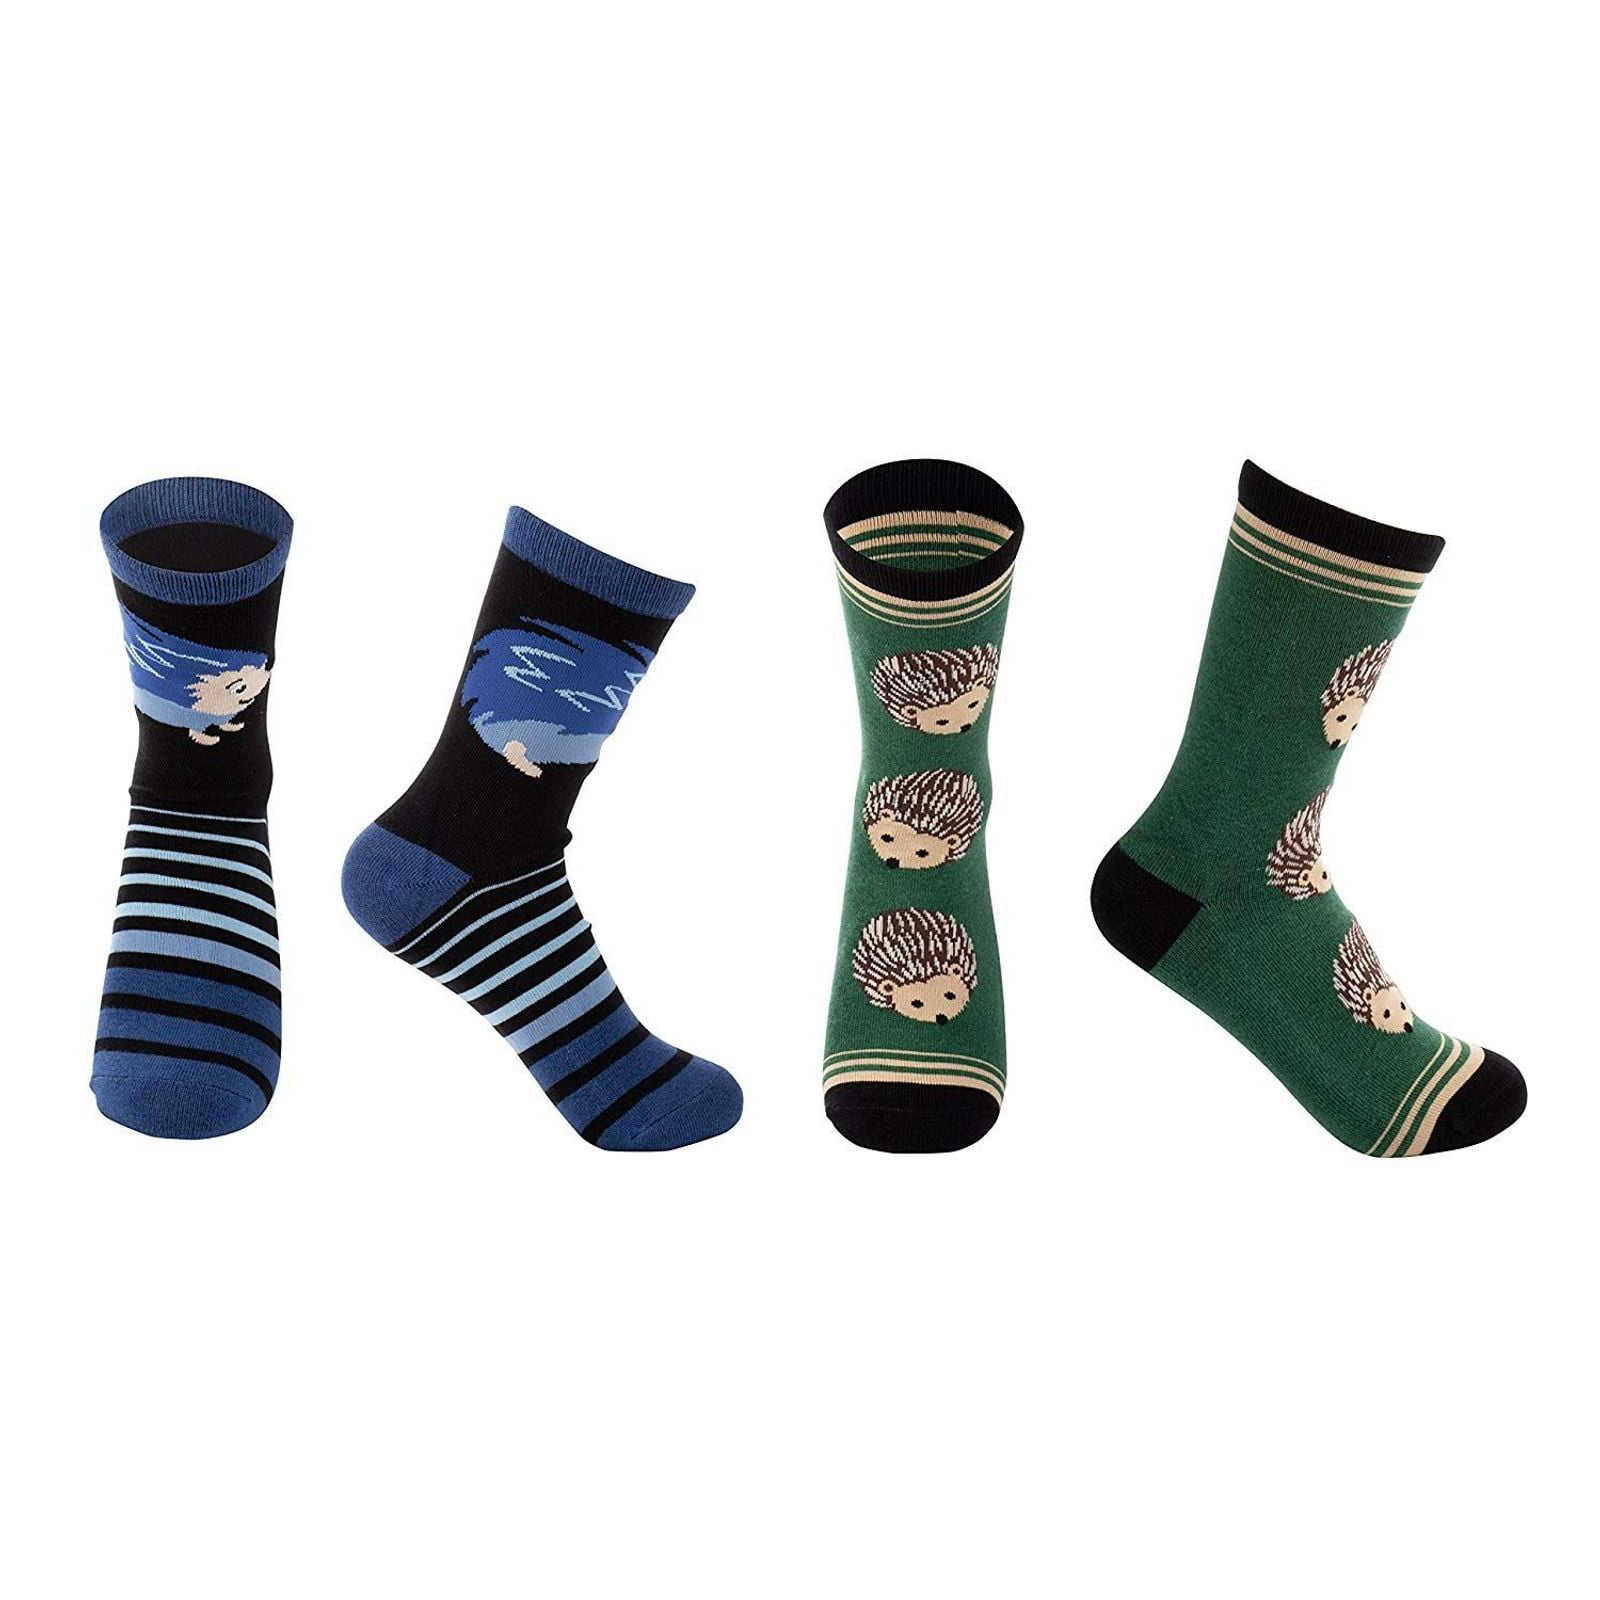 Hedgehog Unisex Funny Casual Crew Socks Athletic Socks For Boys Girls Kids Teenagers